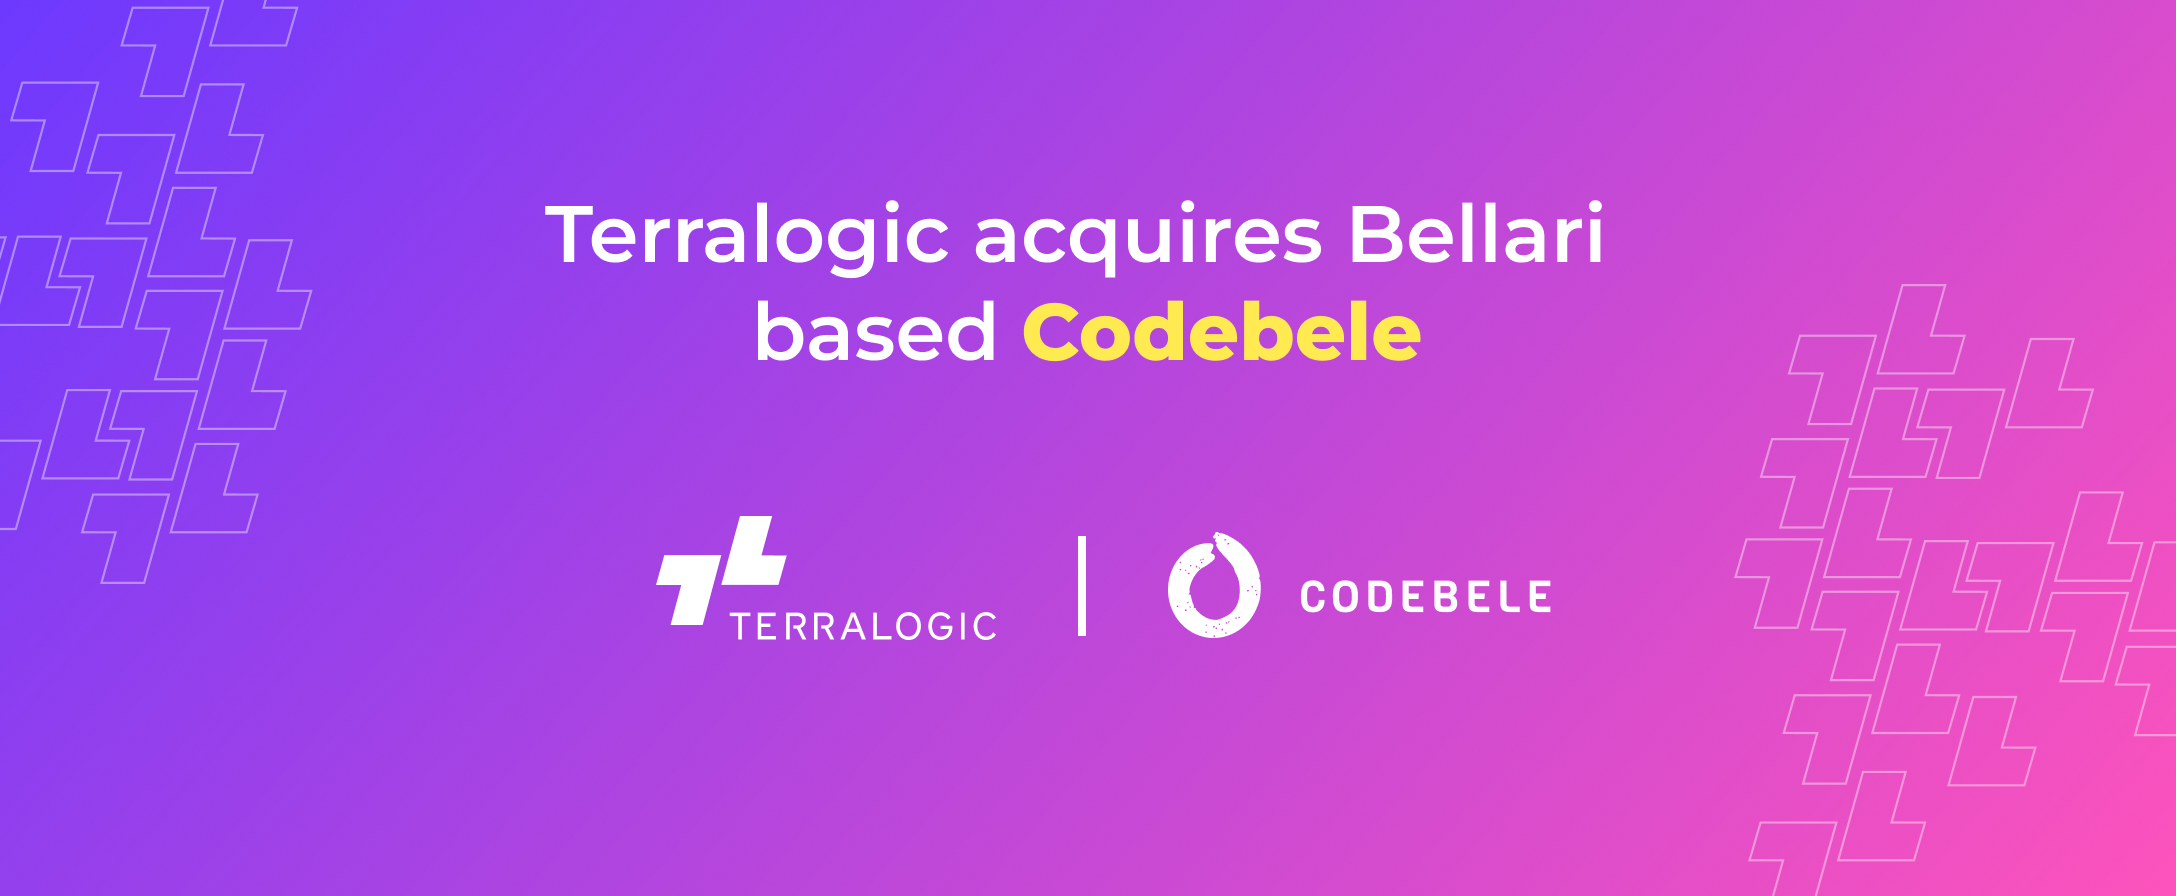 terralogic-announces-the-acquisition-of-codebele-terralogic